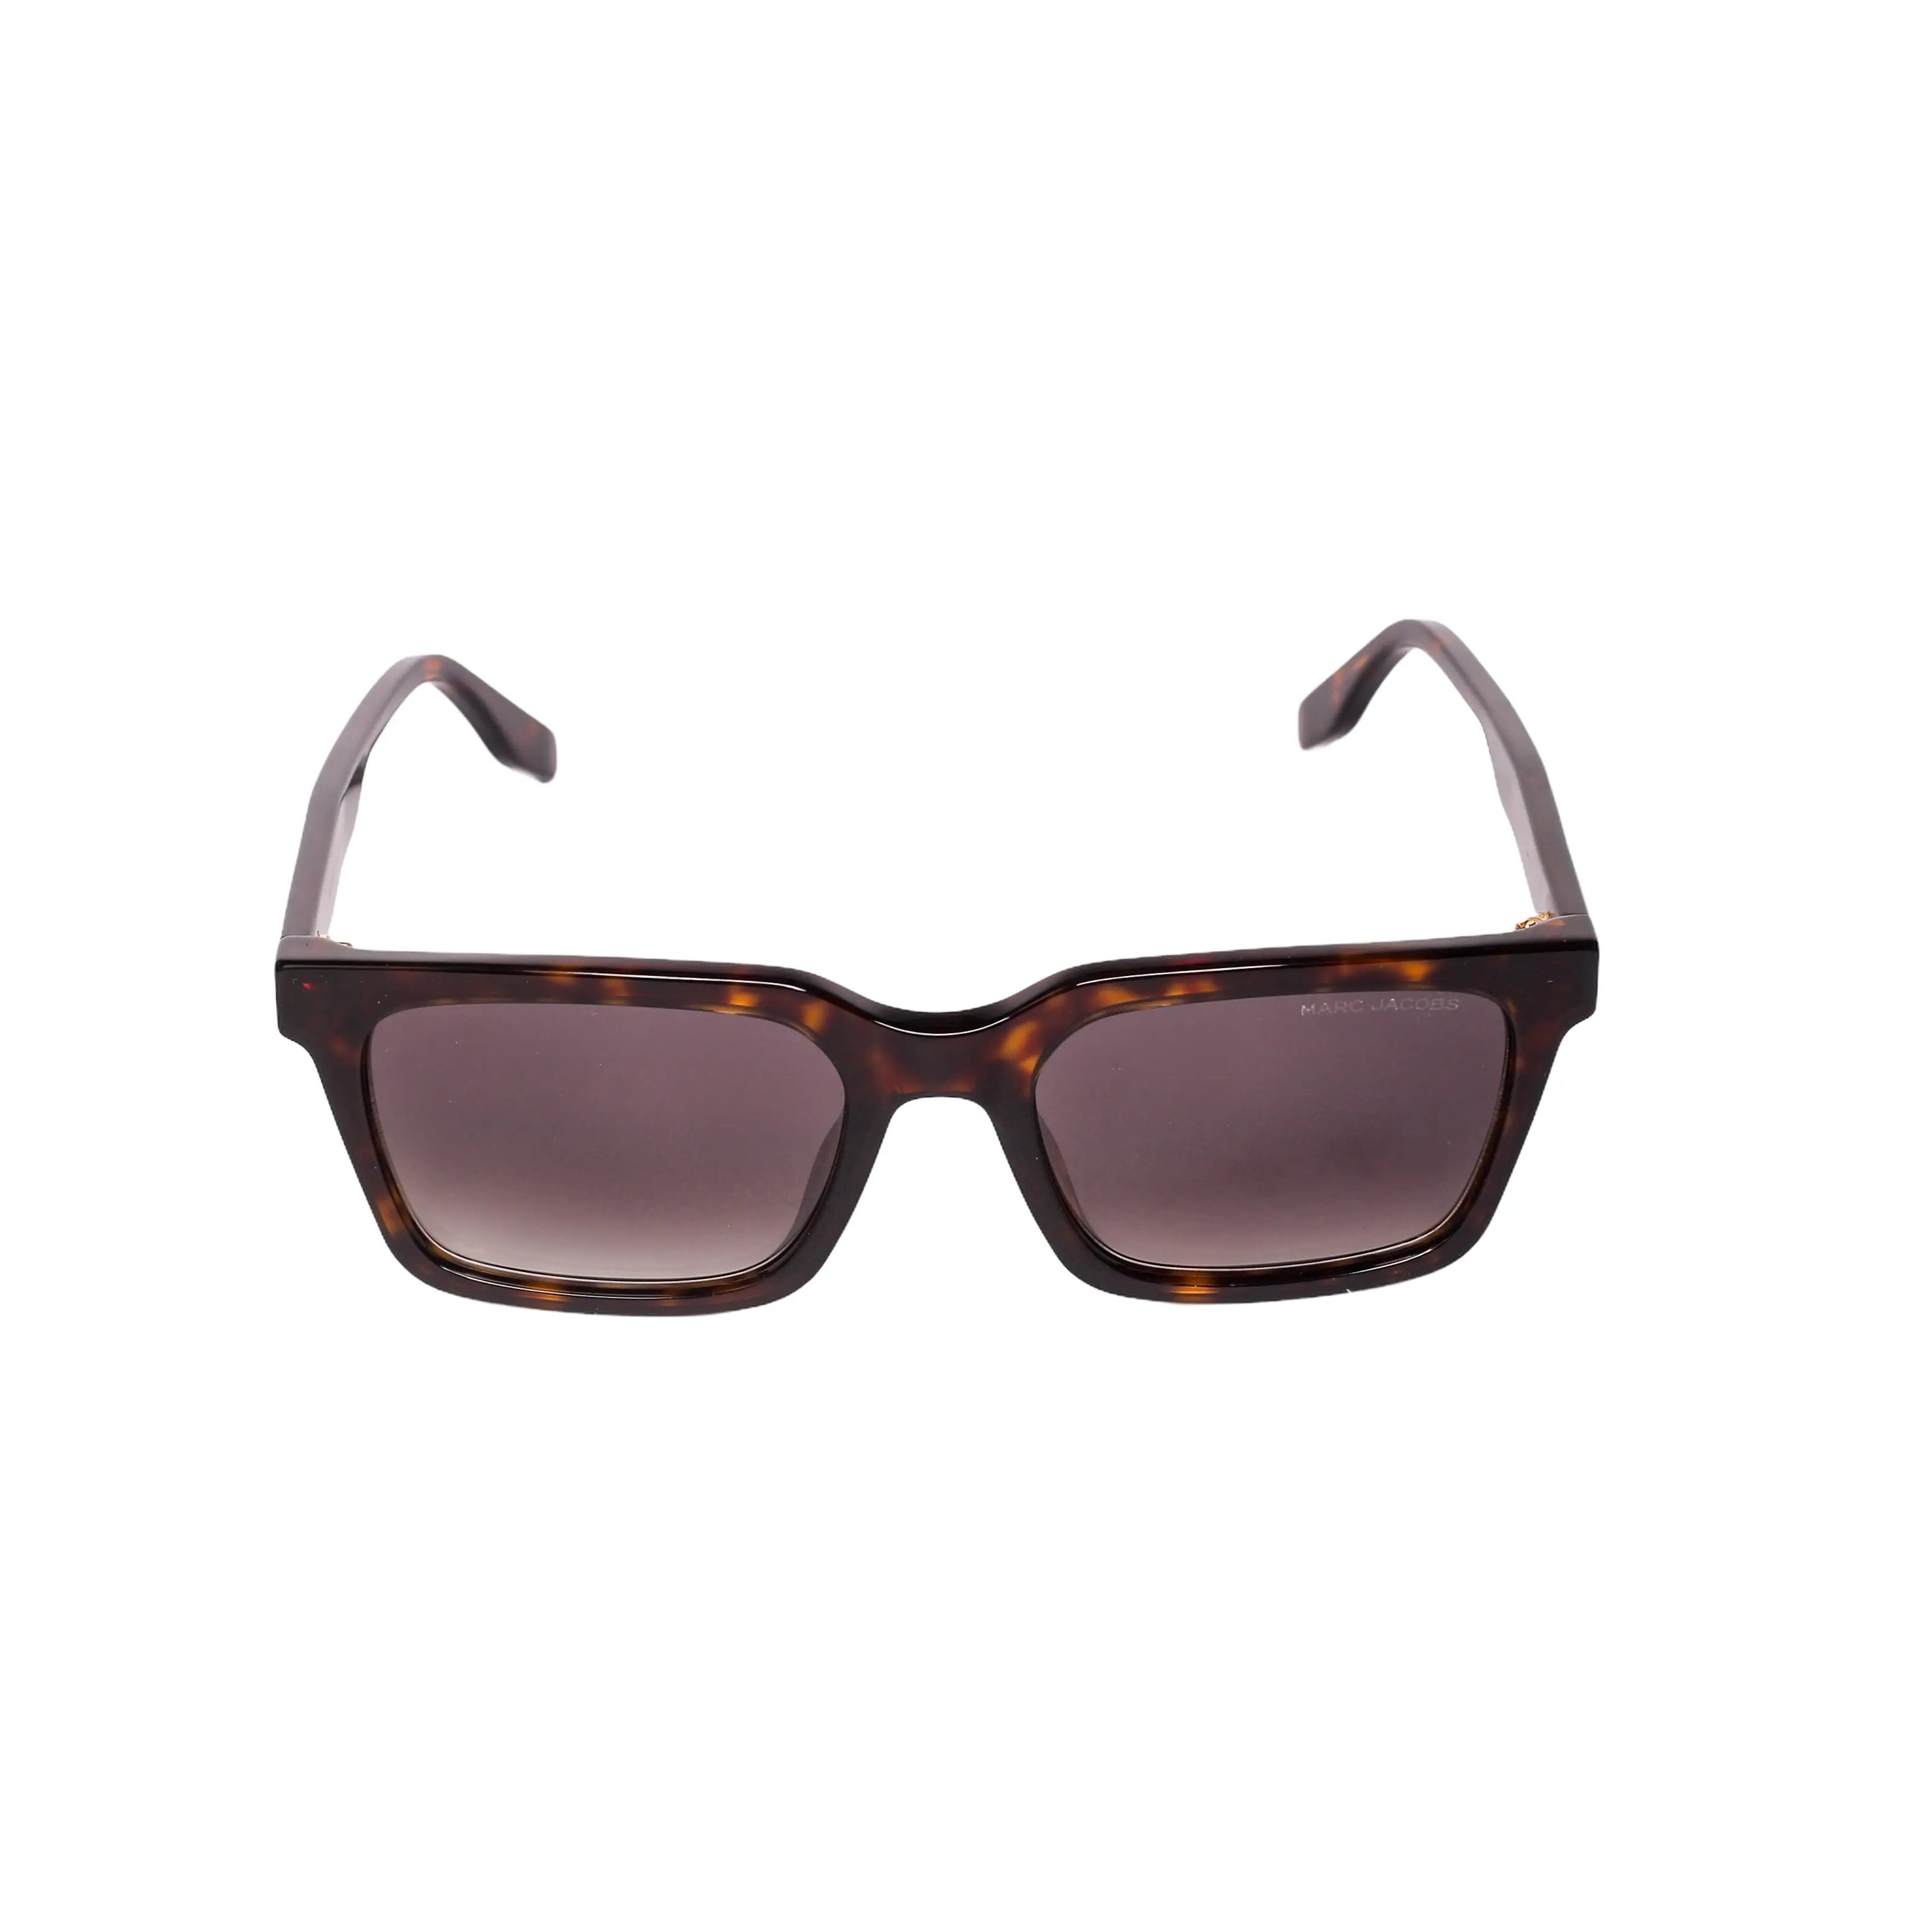 Marc Jacob-MARC 719/S-53-086-9 Sunglasses - Premium Sunglasses from Marc Jacob - Just Rs. 14400! Shop now at Laxmi Opticians